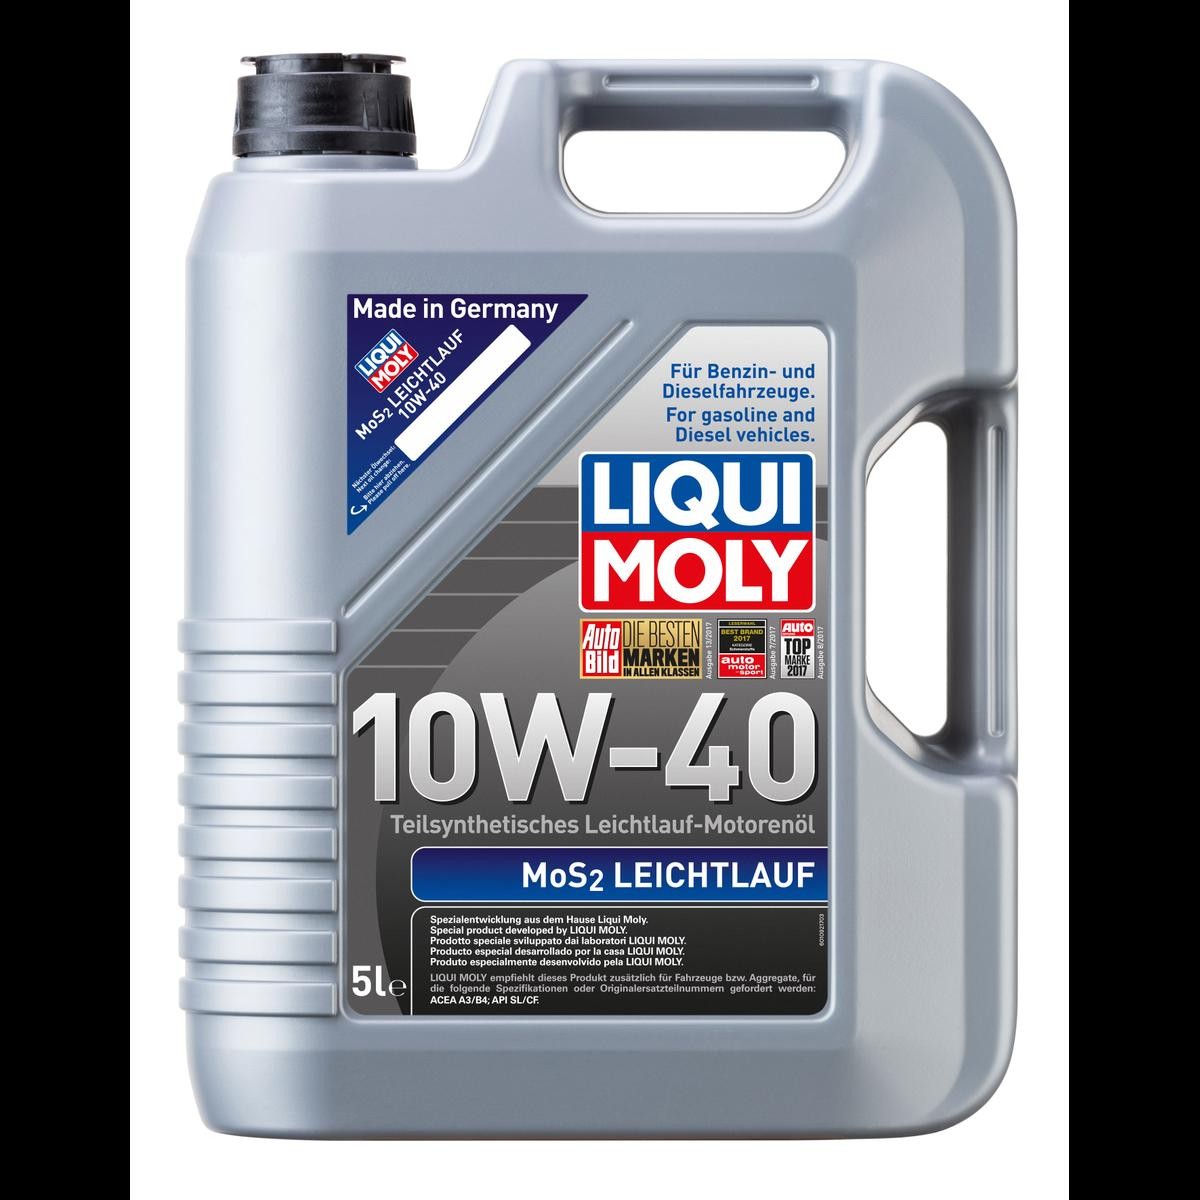 LIQUI MOLY МoS2, Leichtlauf 1092 Motorový olej